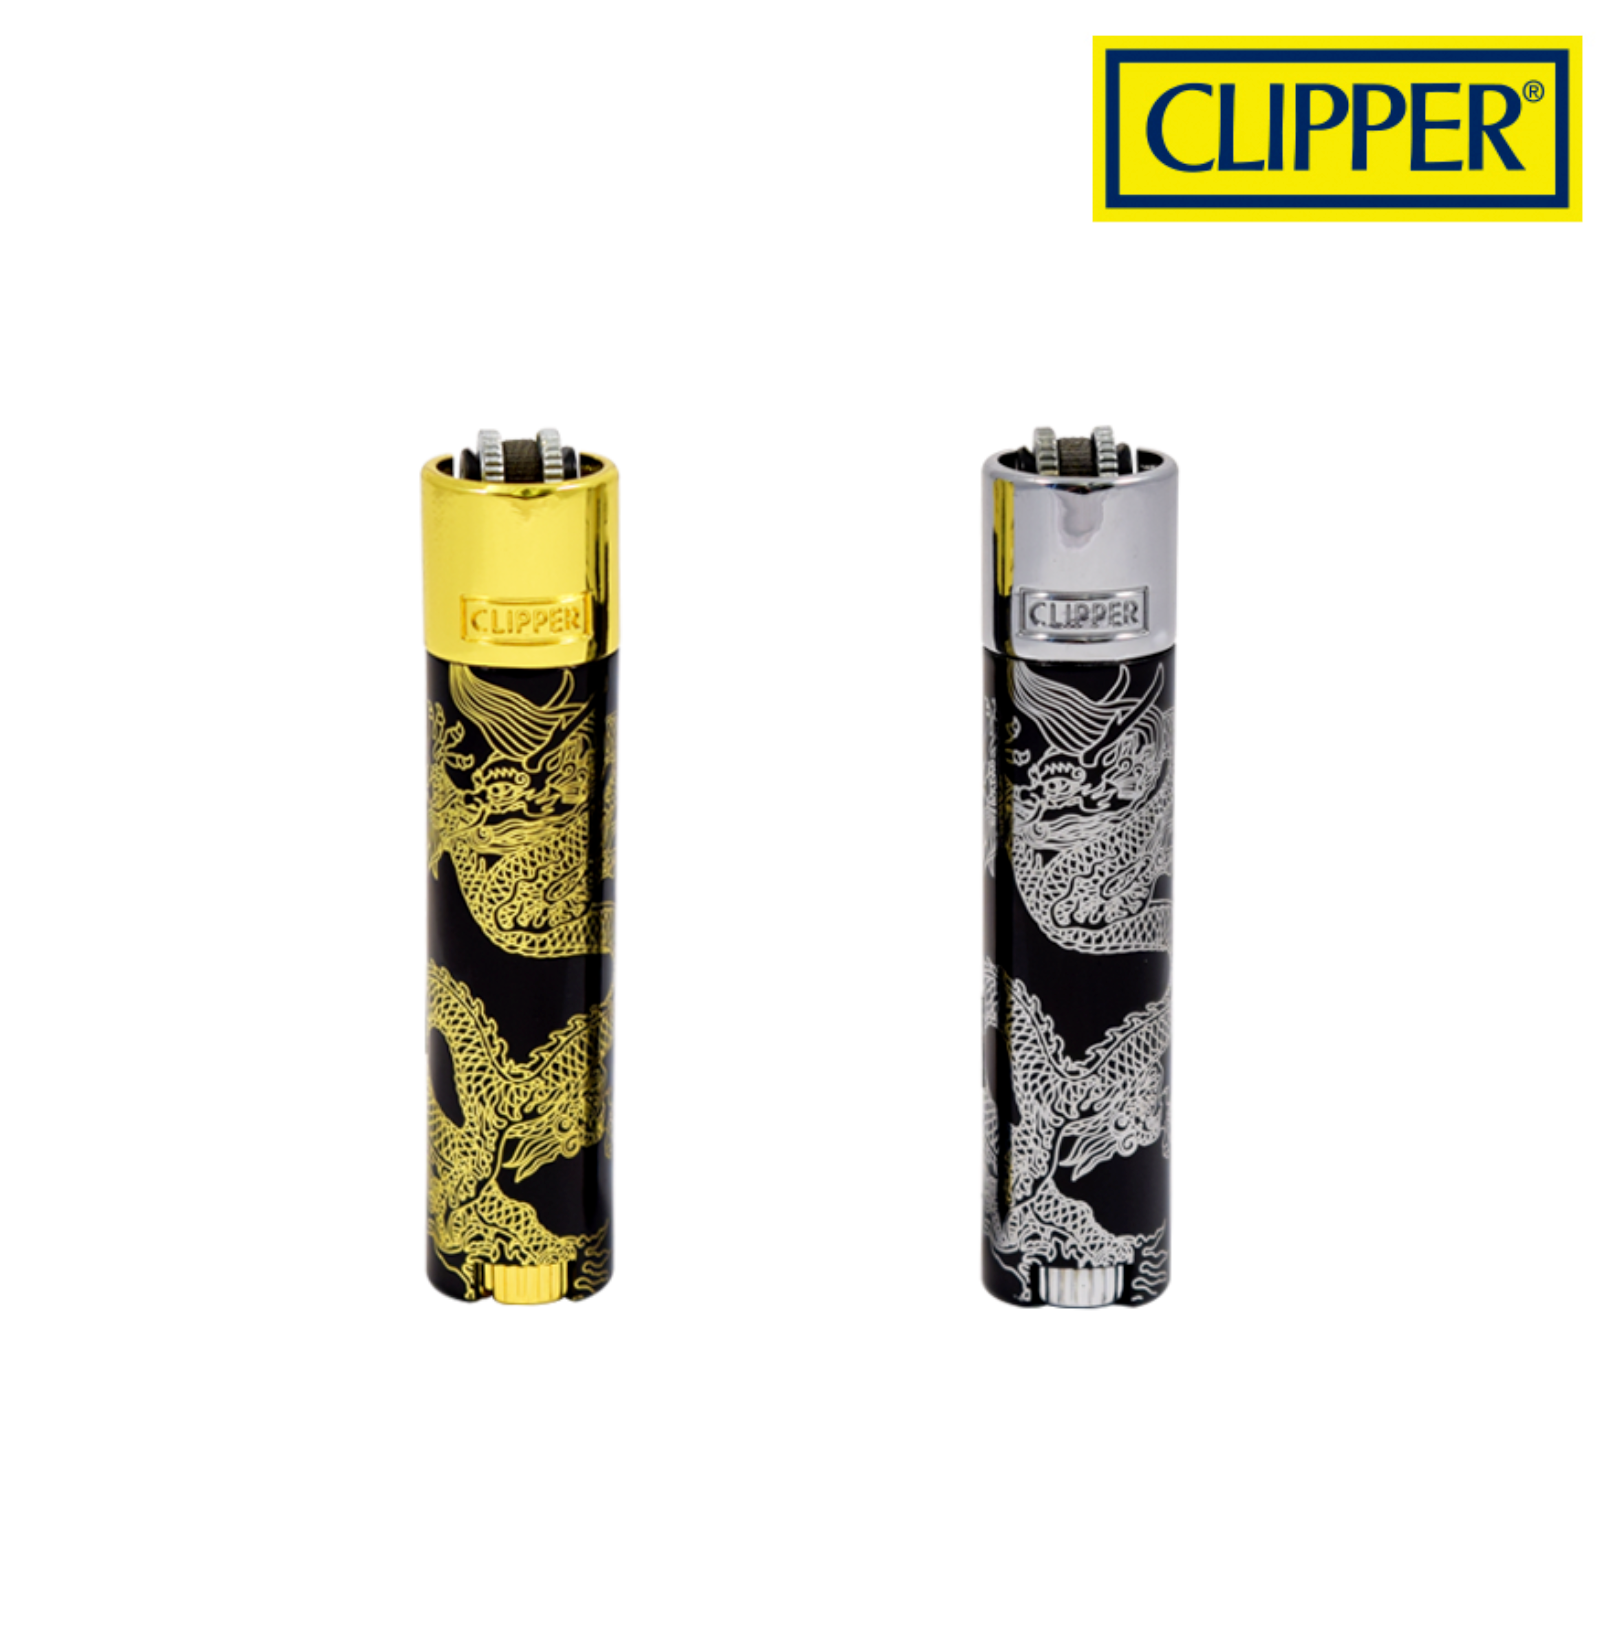 Clipper Super Dragons Metal Single Flame Lighter